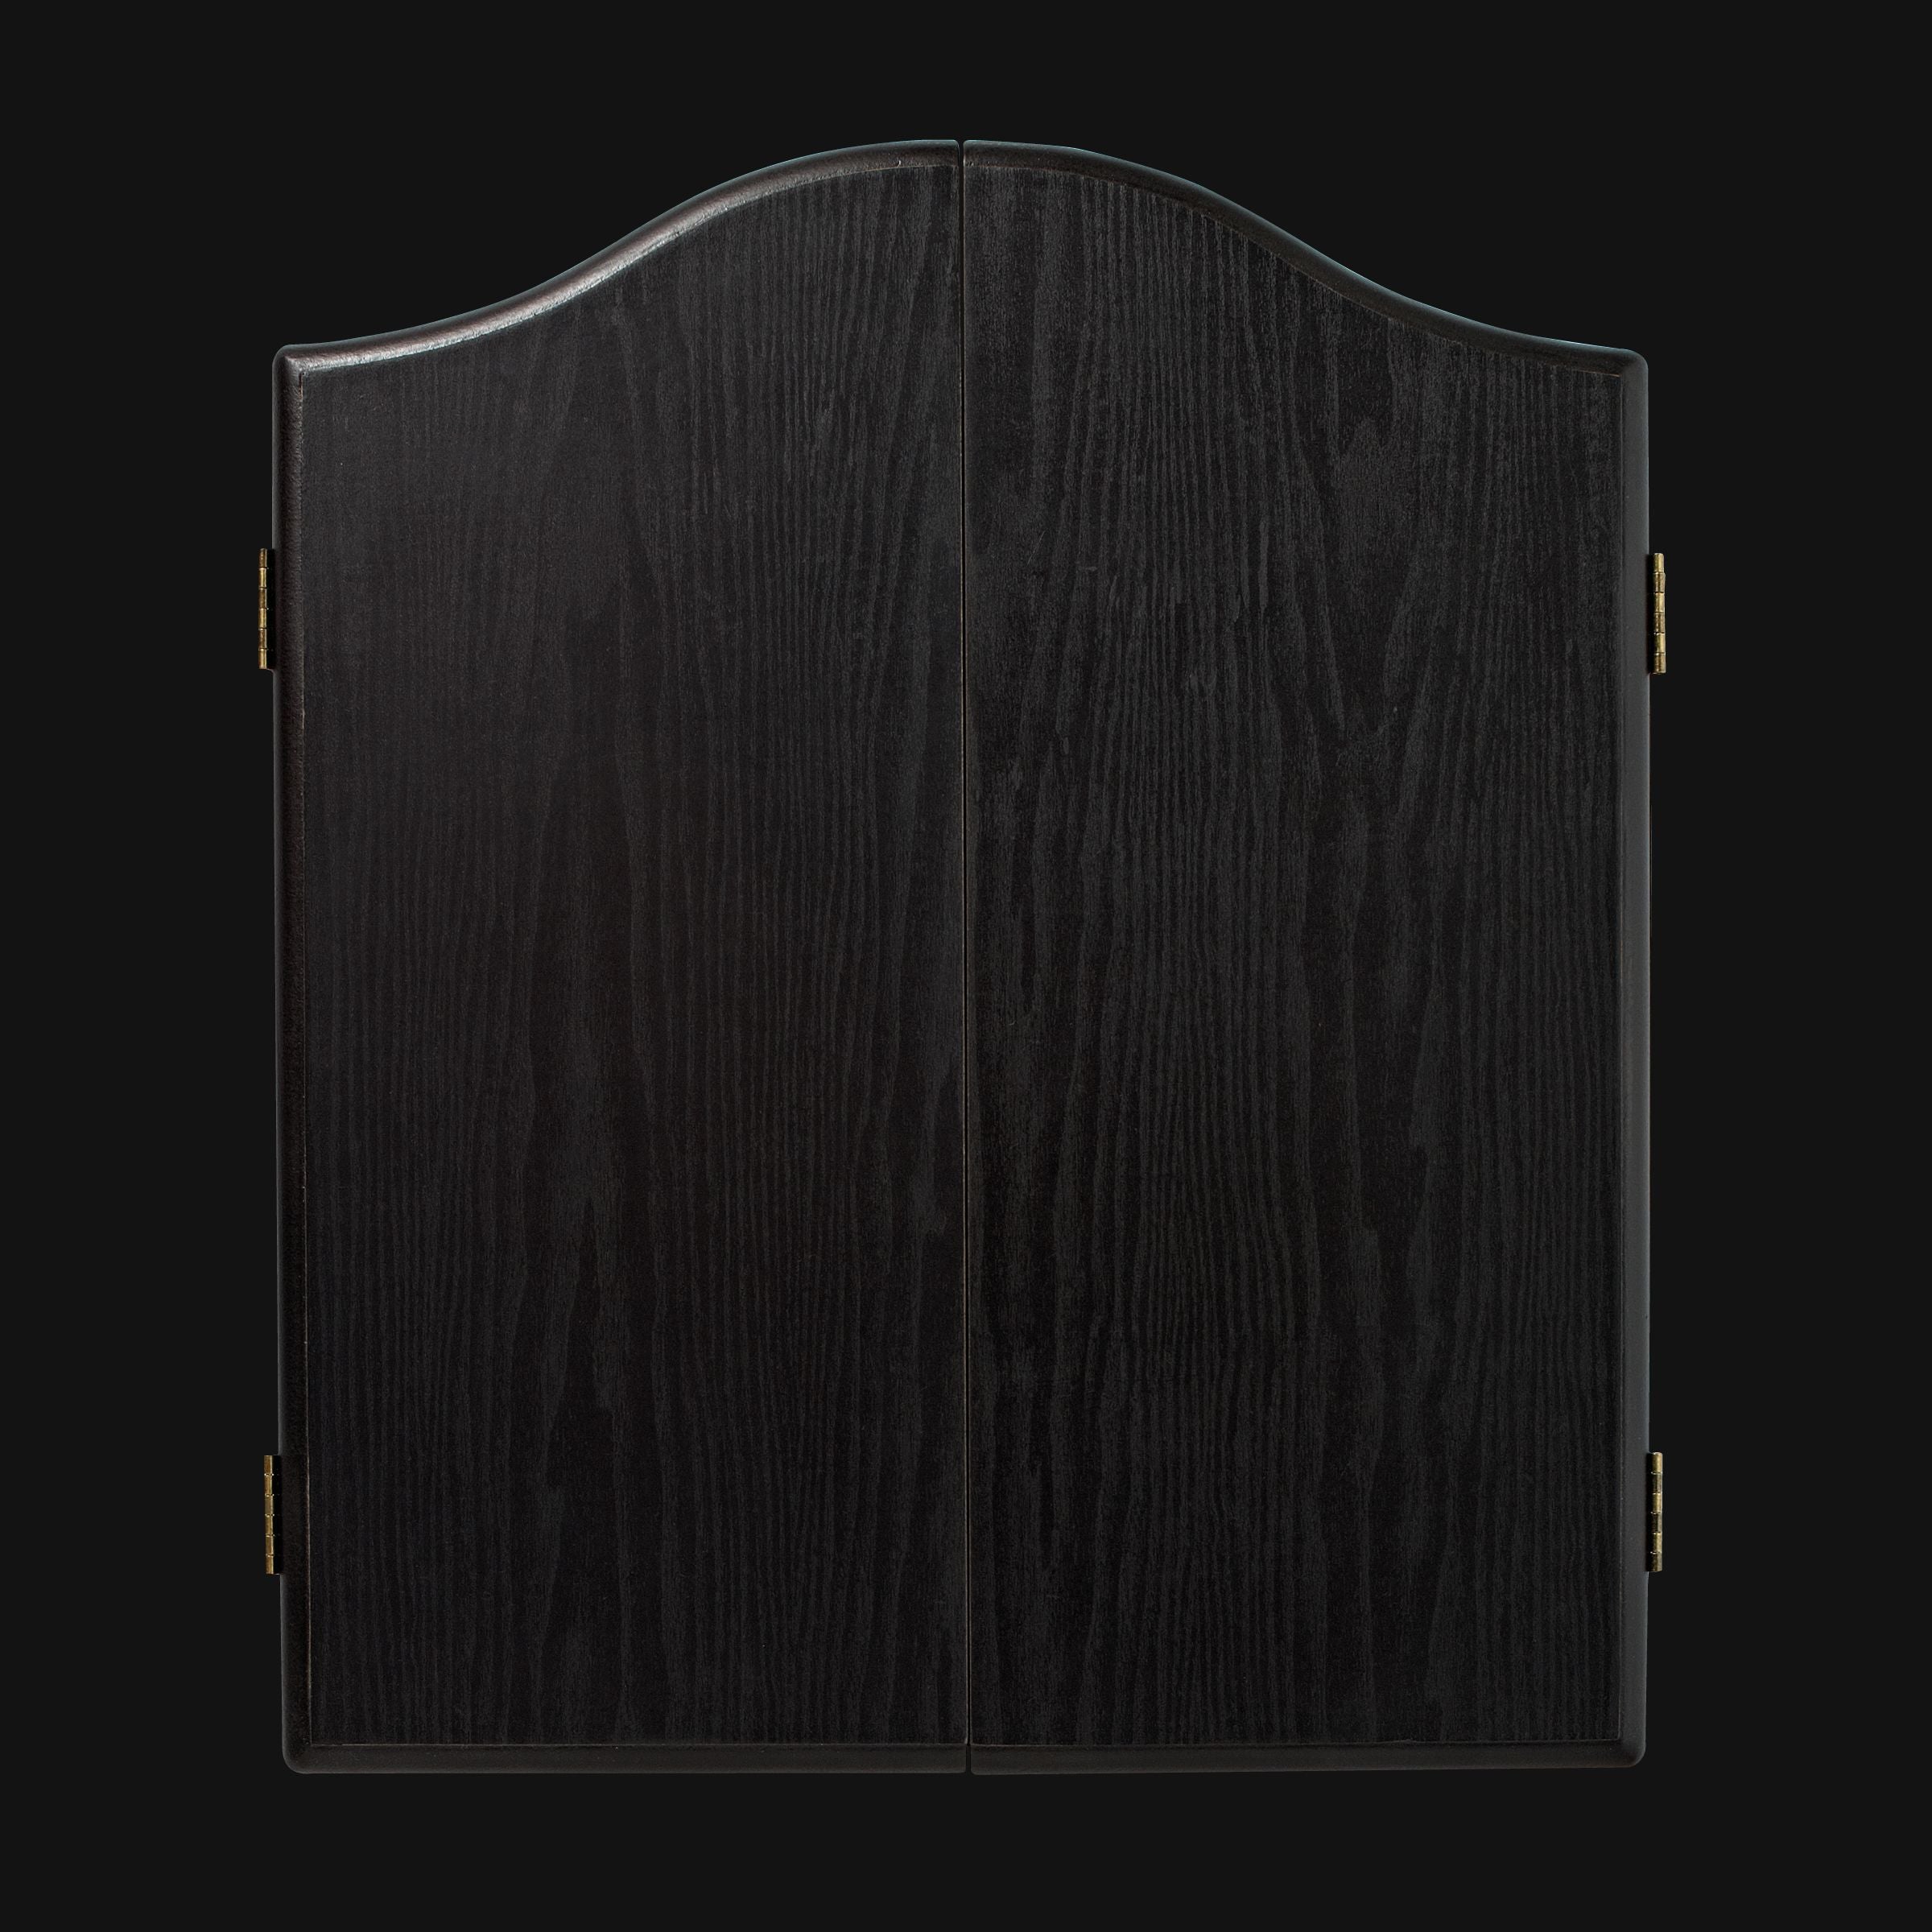 WINMAU Classic Black Deluxe Dartboard Cabinet